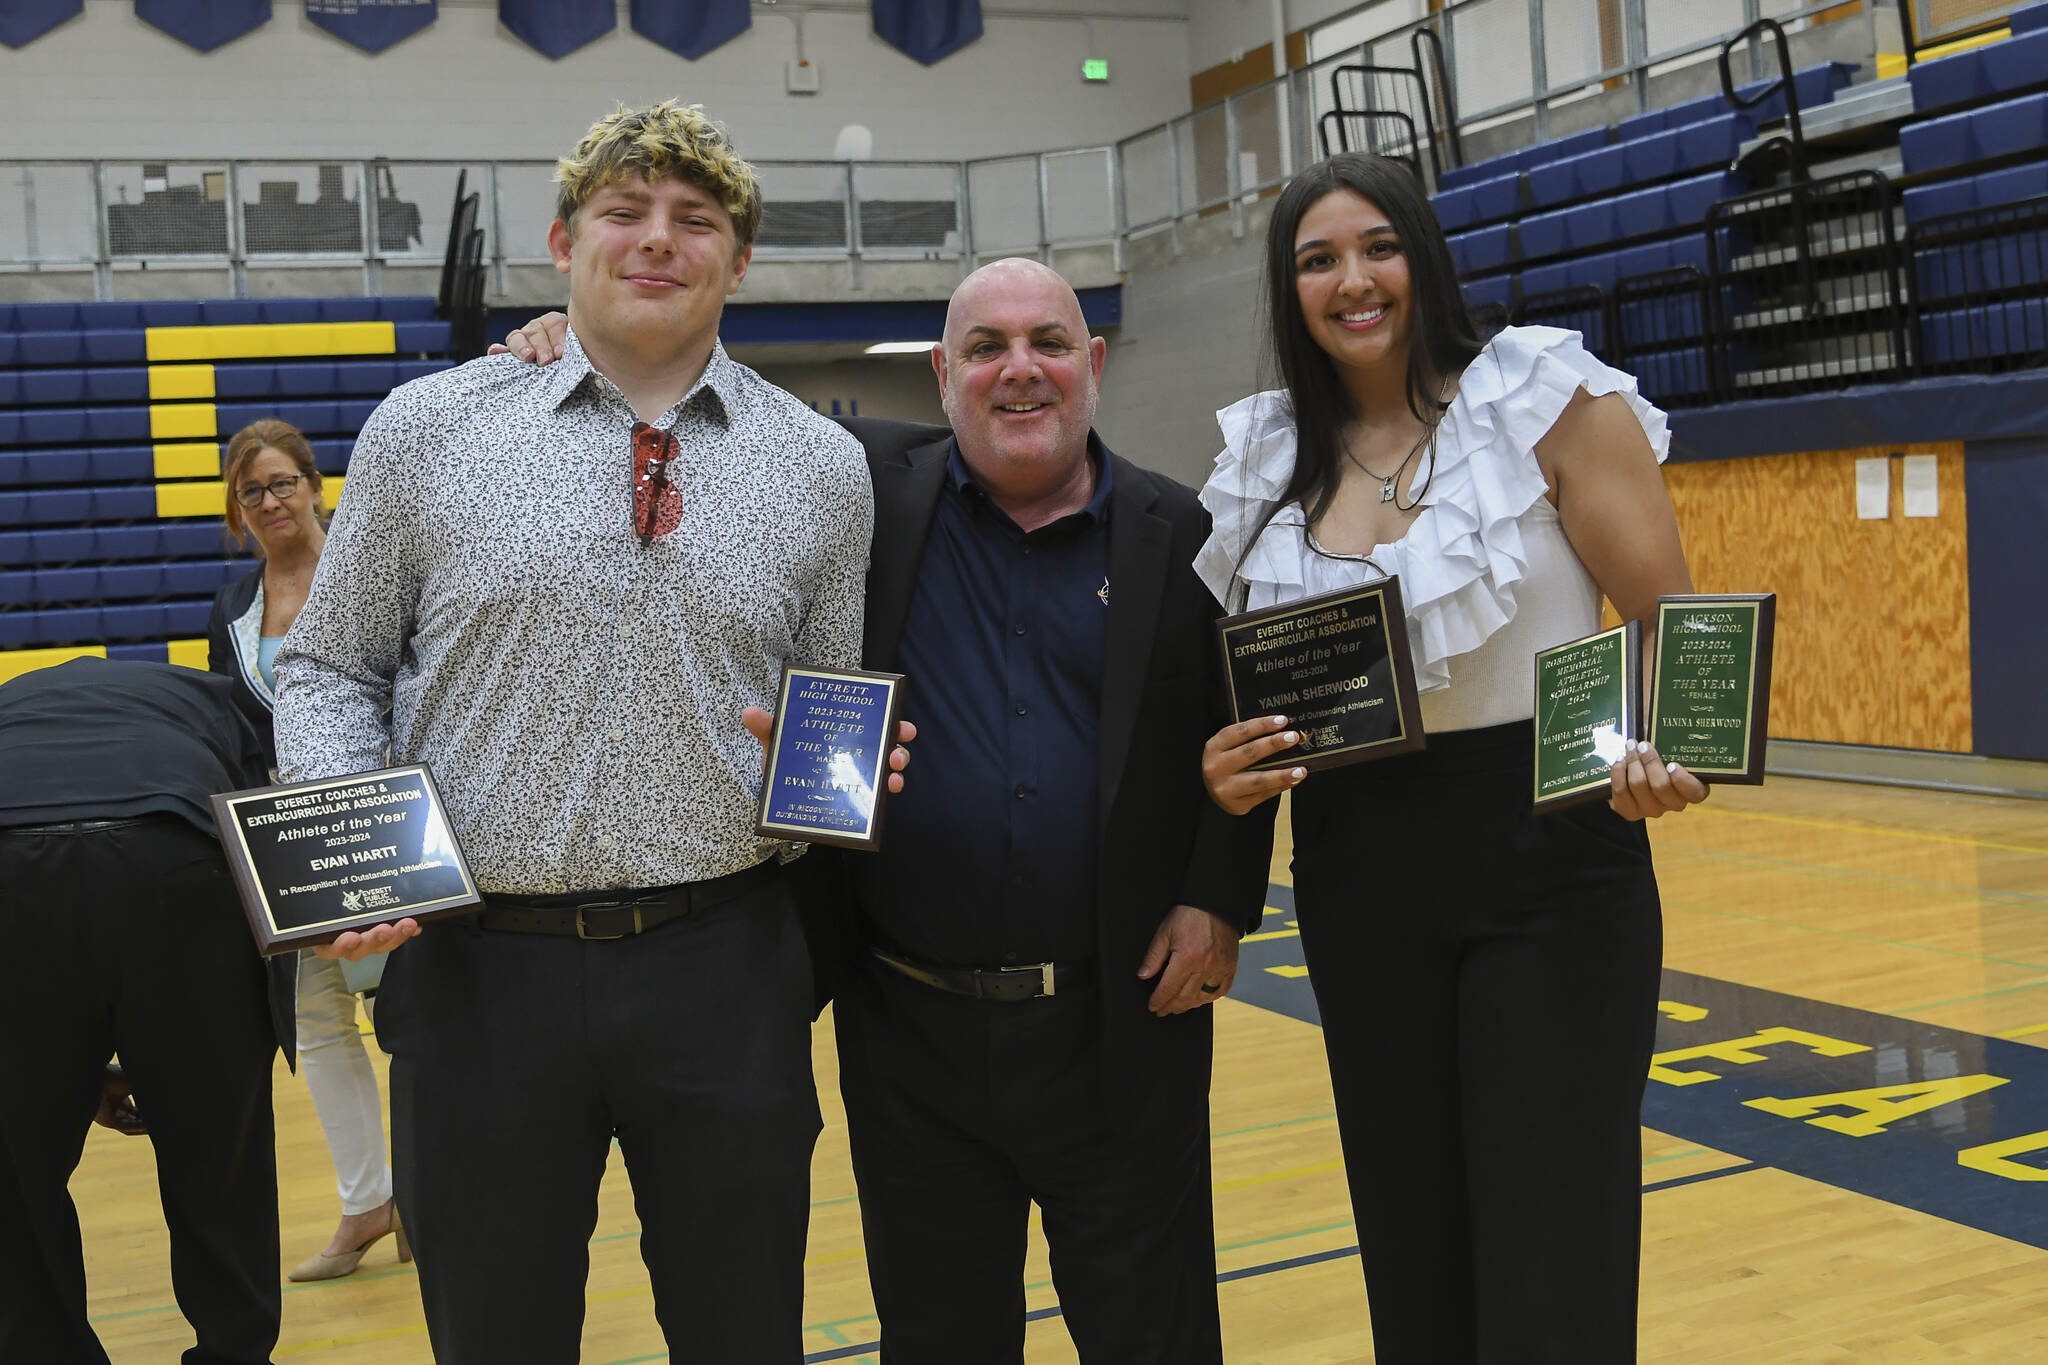 Everett School District Athlete of the Year award winners Evan Hart (left) and Yanina Sherwood (right). (Photo courtesy of the Everett School District)